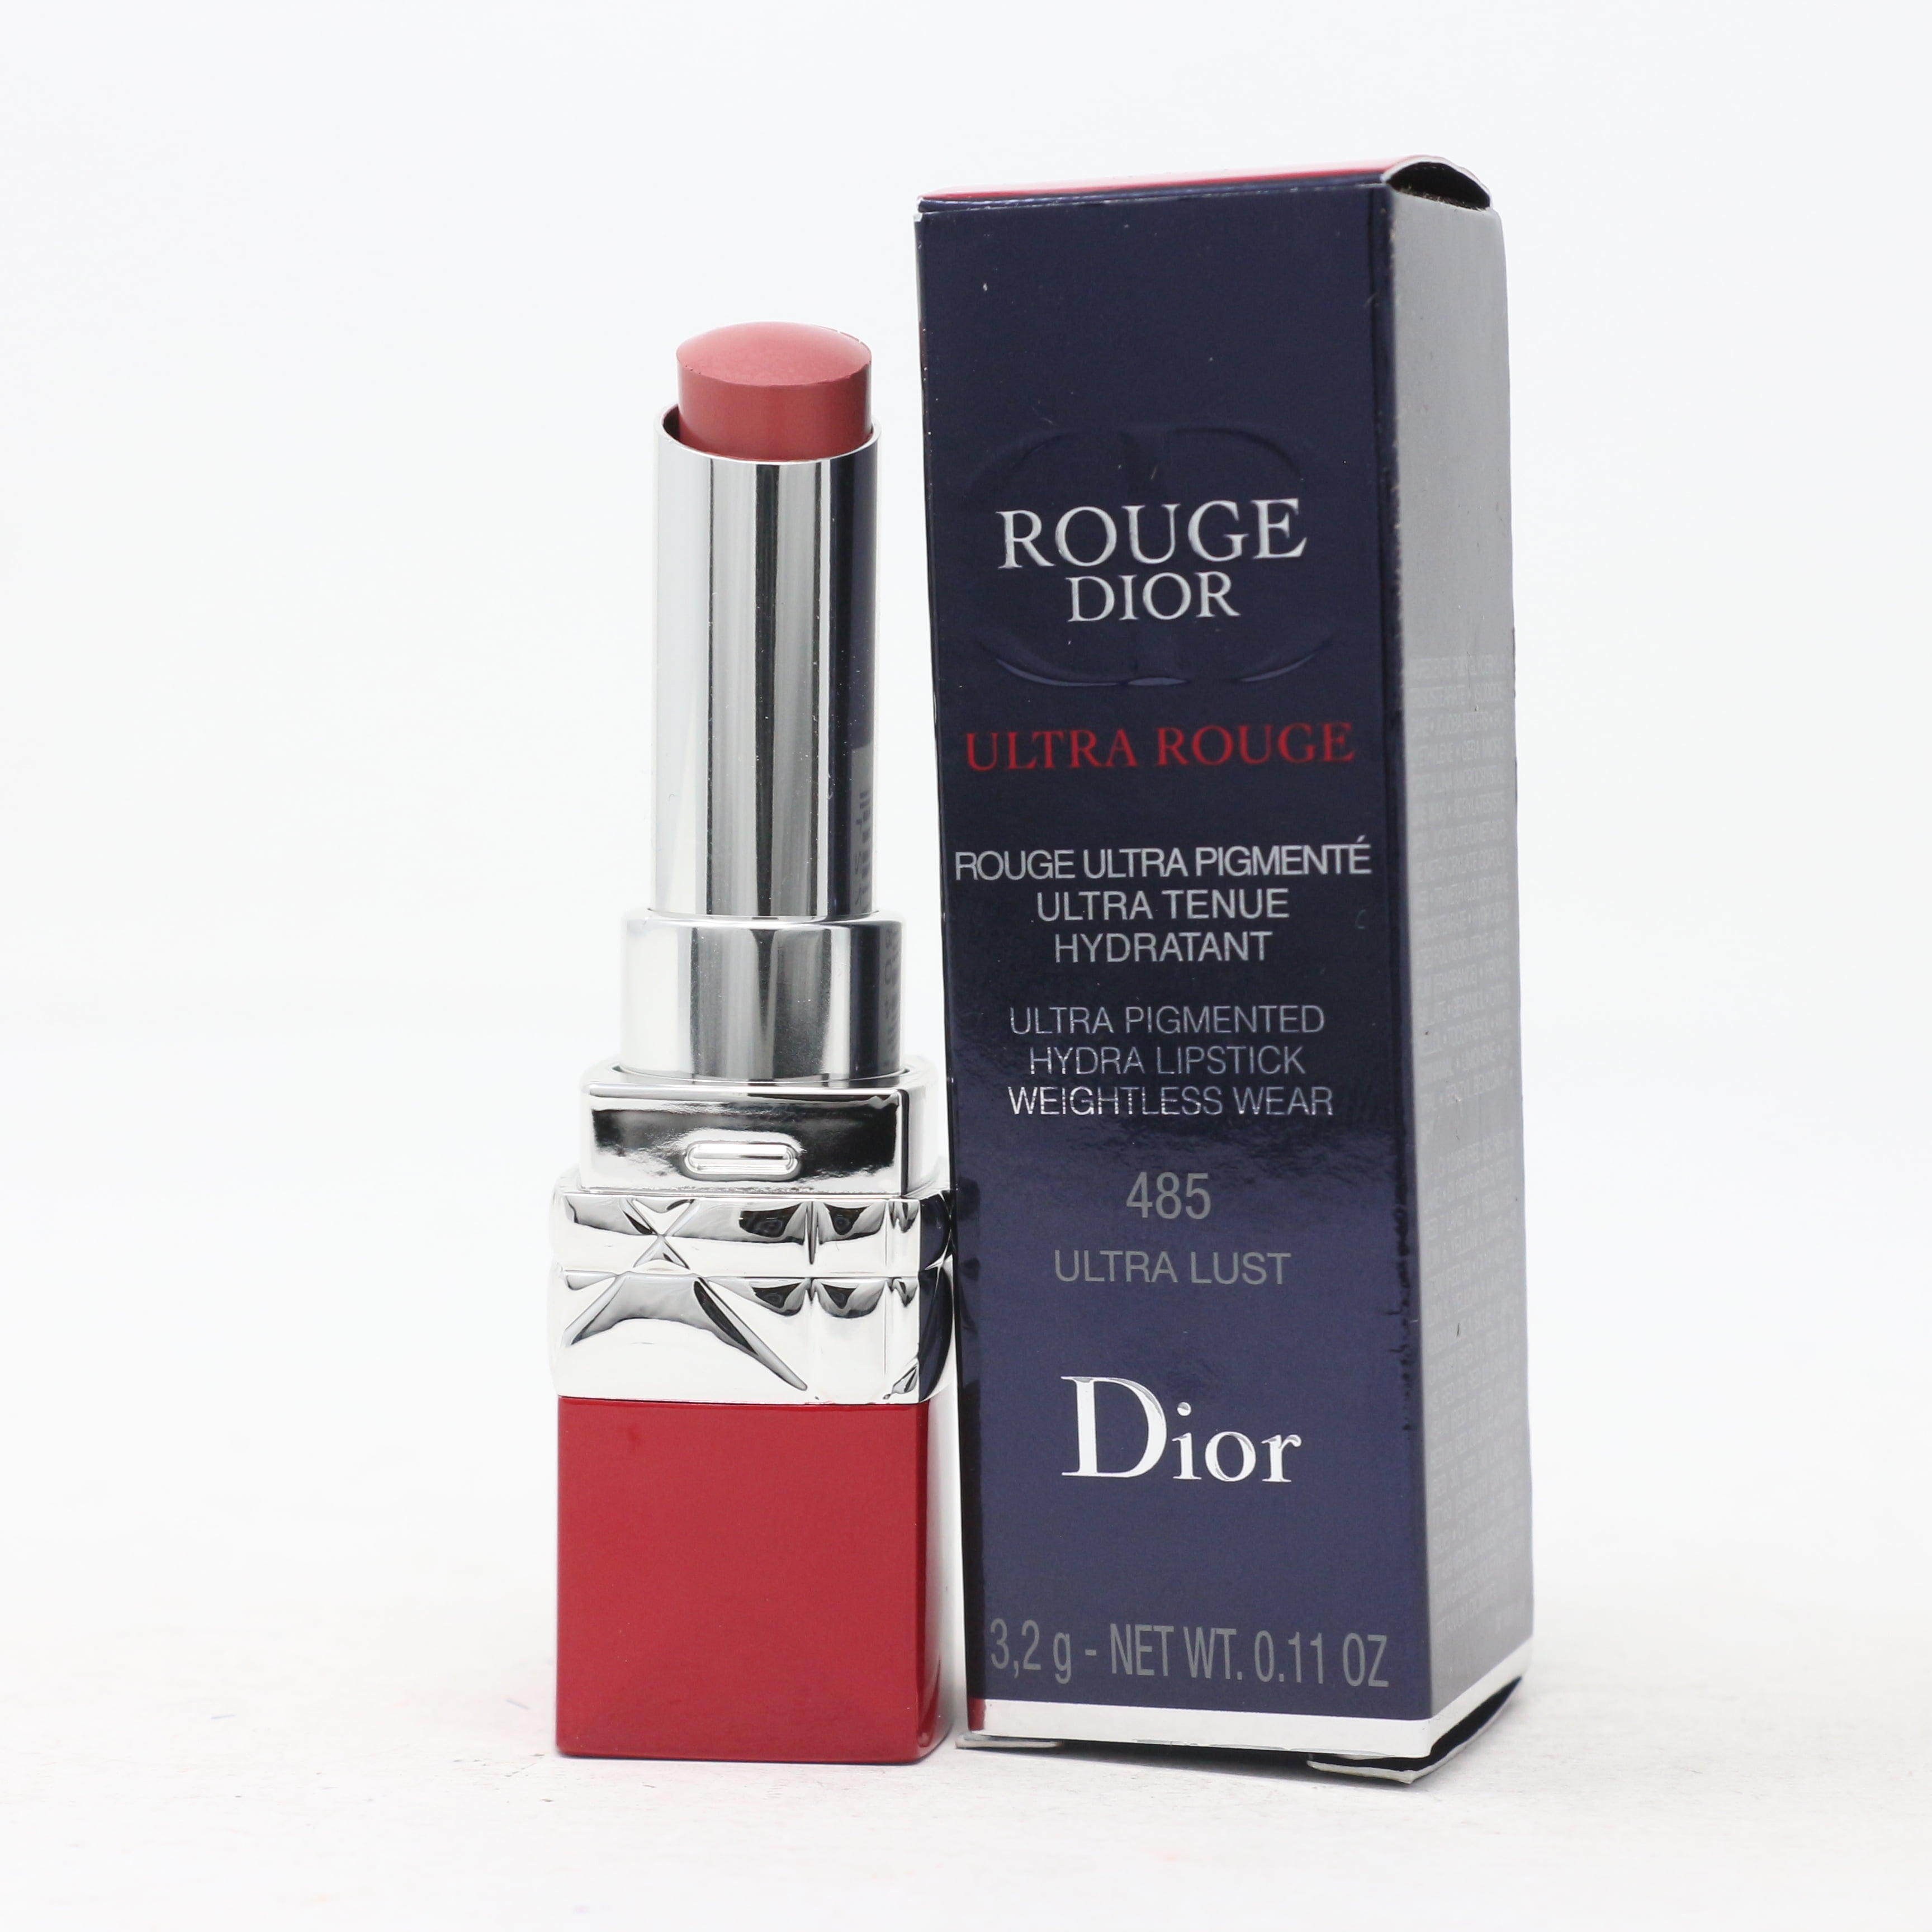 dior 485 lipstick